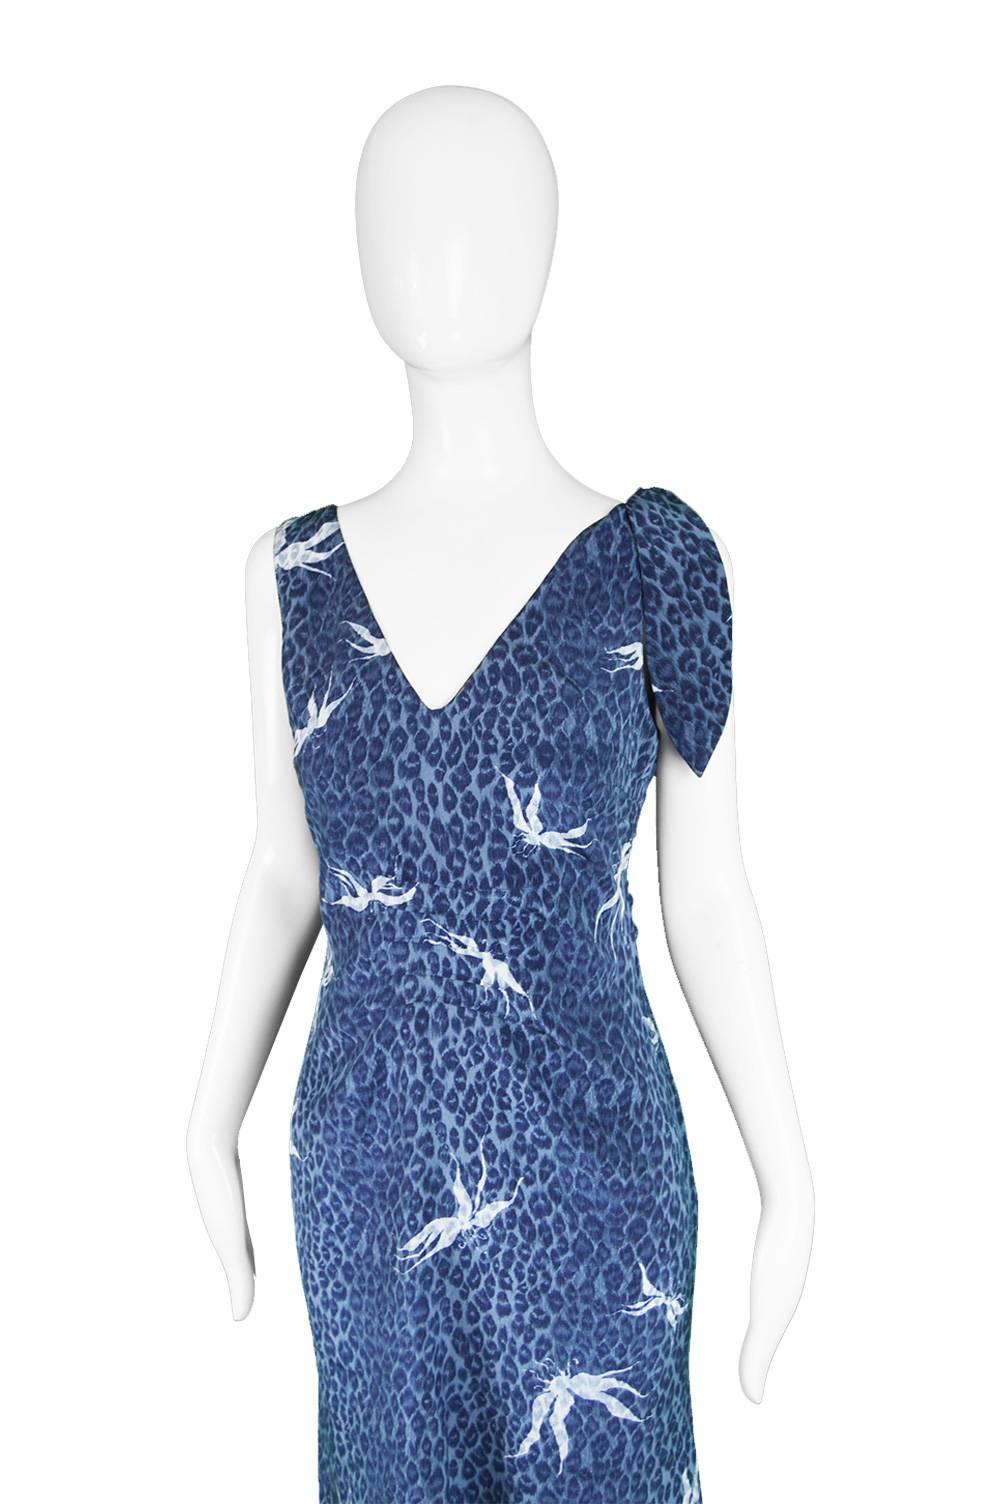 Women's Chloé by Stella McCartney Vintage Sleeveless Blue Silk Leopard Dress, S / S 1999